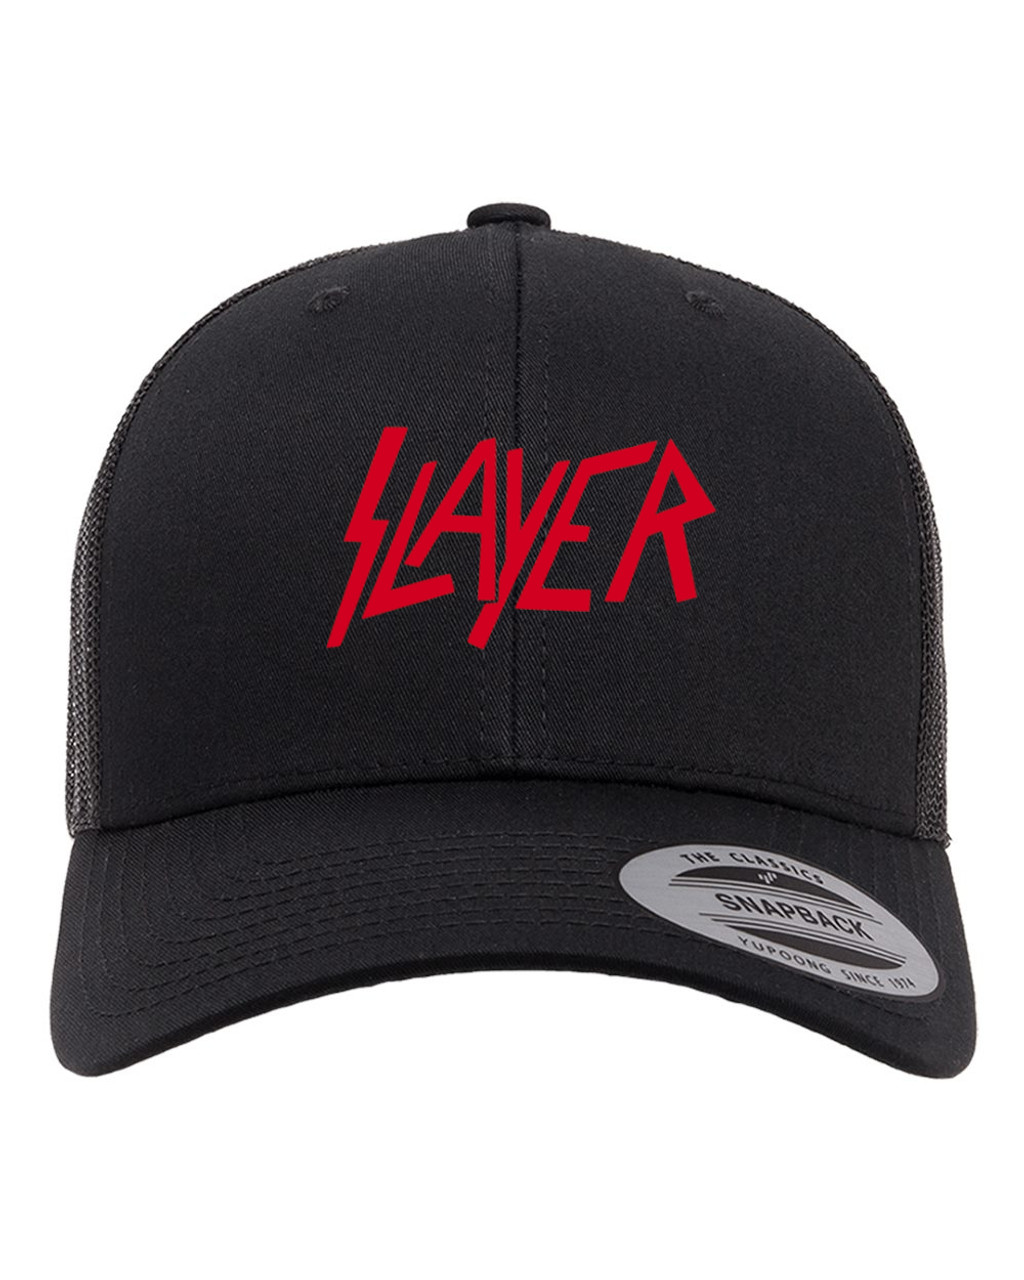 Slayer Thrash Metal Heat Heat Pressed Black on Black Curved Bill Hat - Adult Mesh Trucker Snap Back Cap